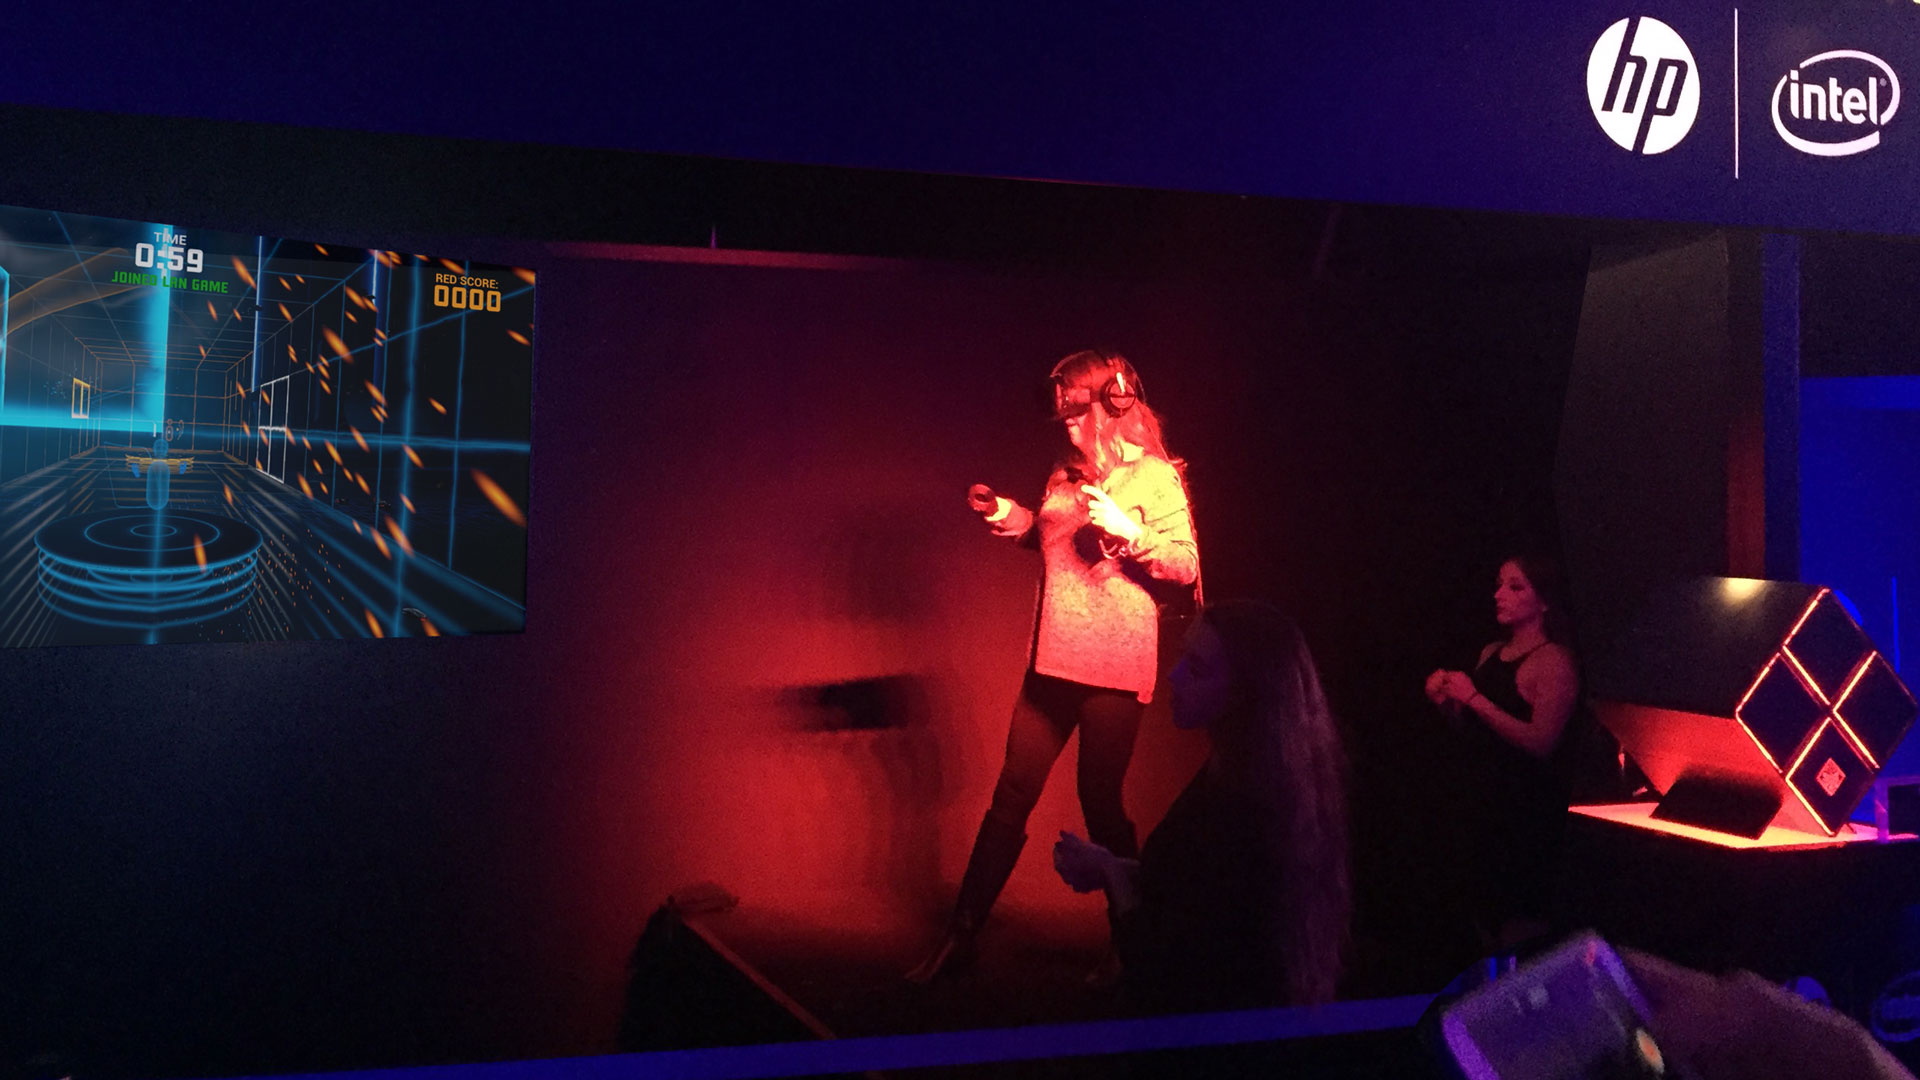 Groove Jones Multiplayer VR Game Platform "LightStrike" at CES